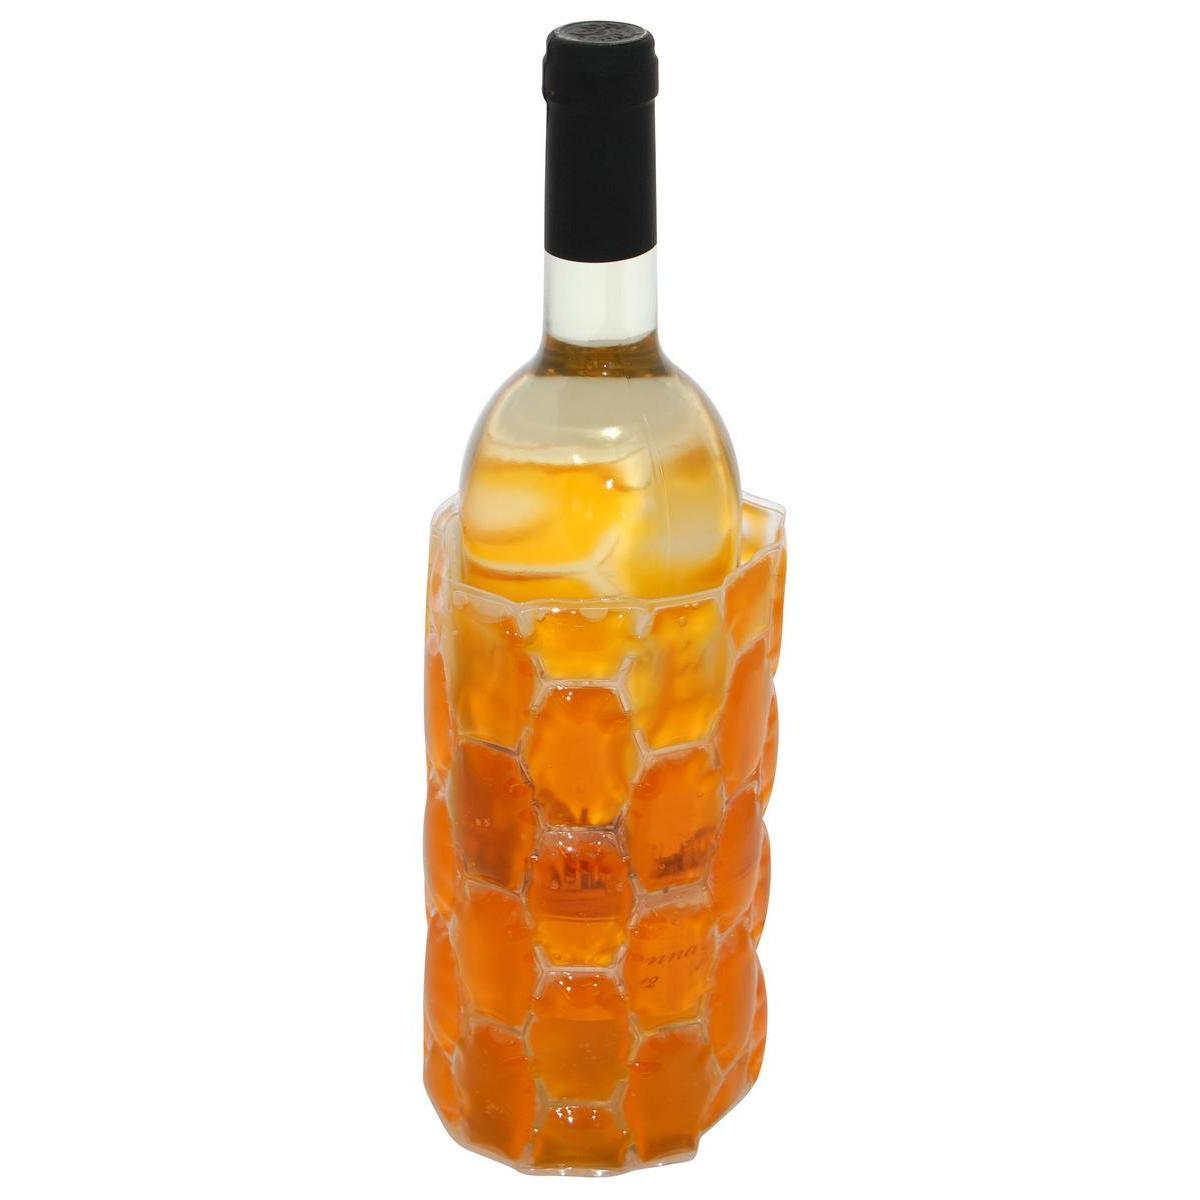 2 sacs rafraîchissants vin - PVC - 16 x 0,25 x H 21 cm - Blanc et orange